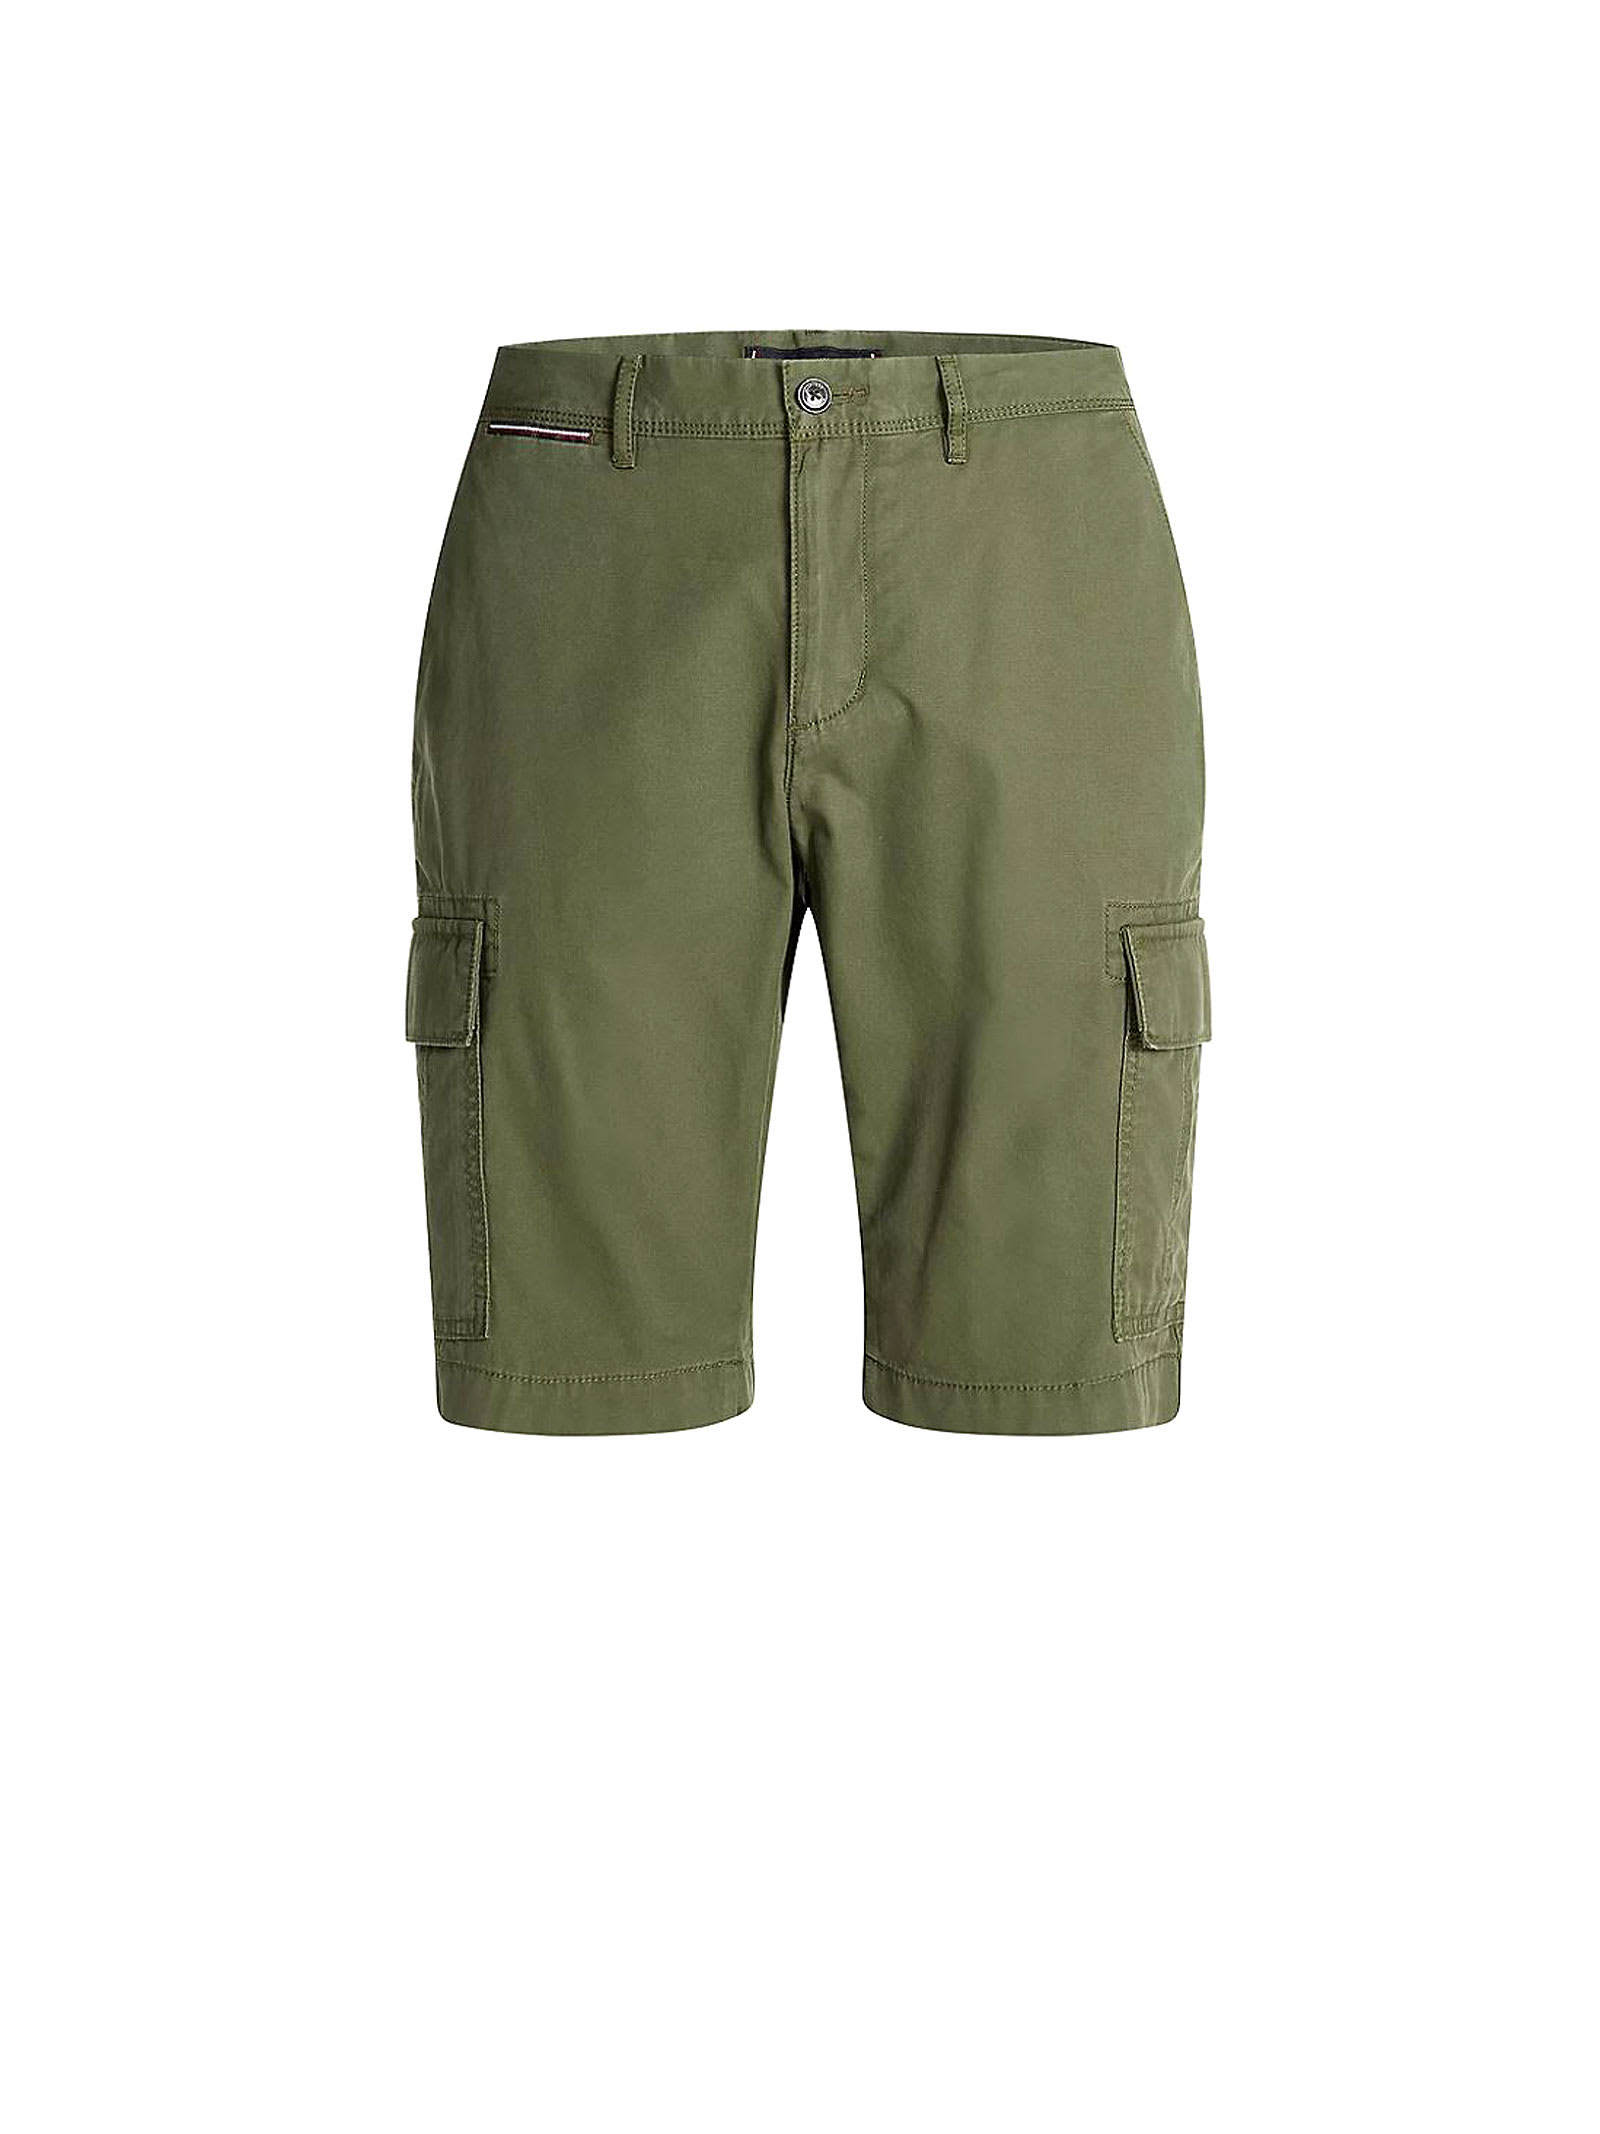 Tommy Hilfiger Military Green Cargo Bermuda Shorts